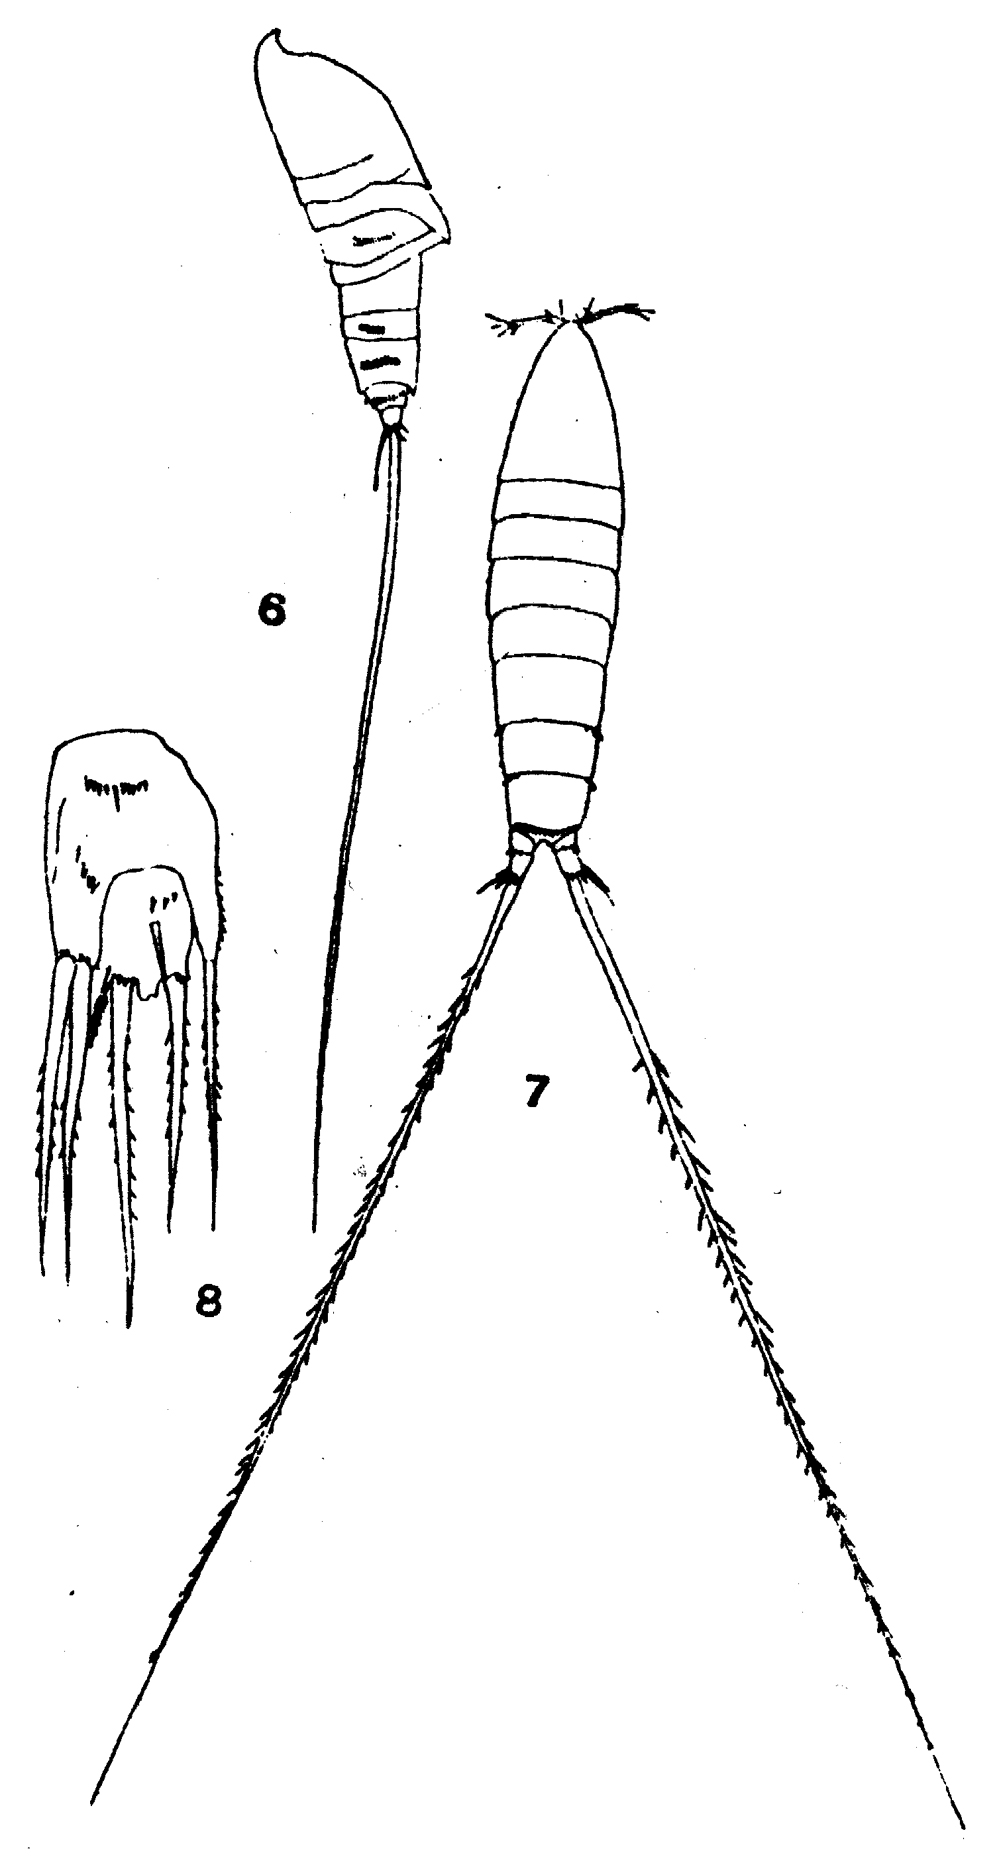 Species Microsetella rosea - Plate 5 of morphological figures